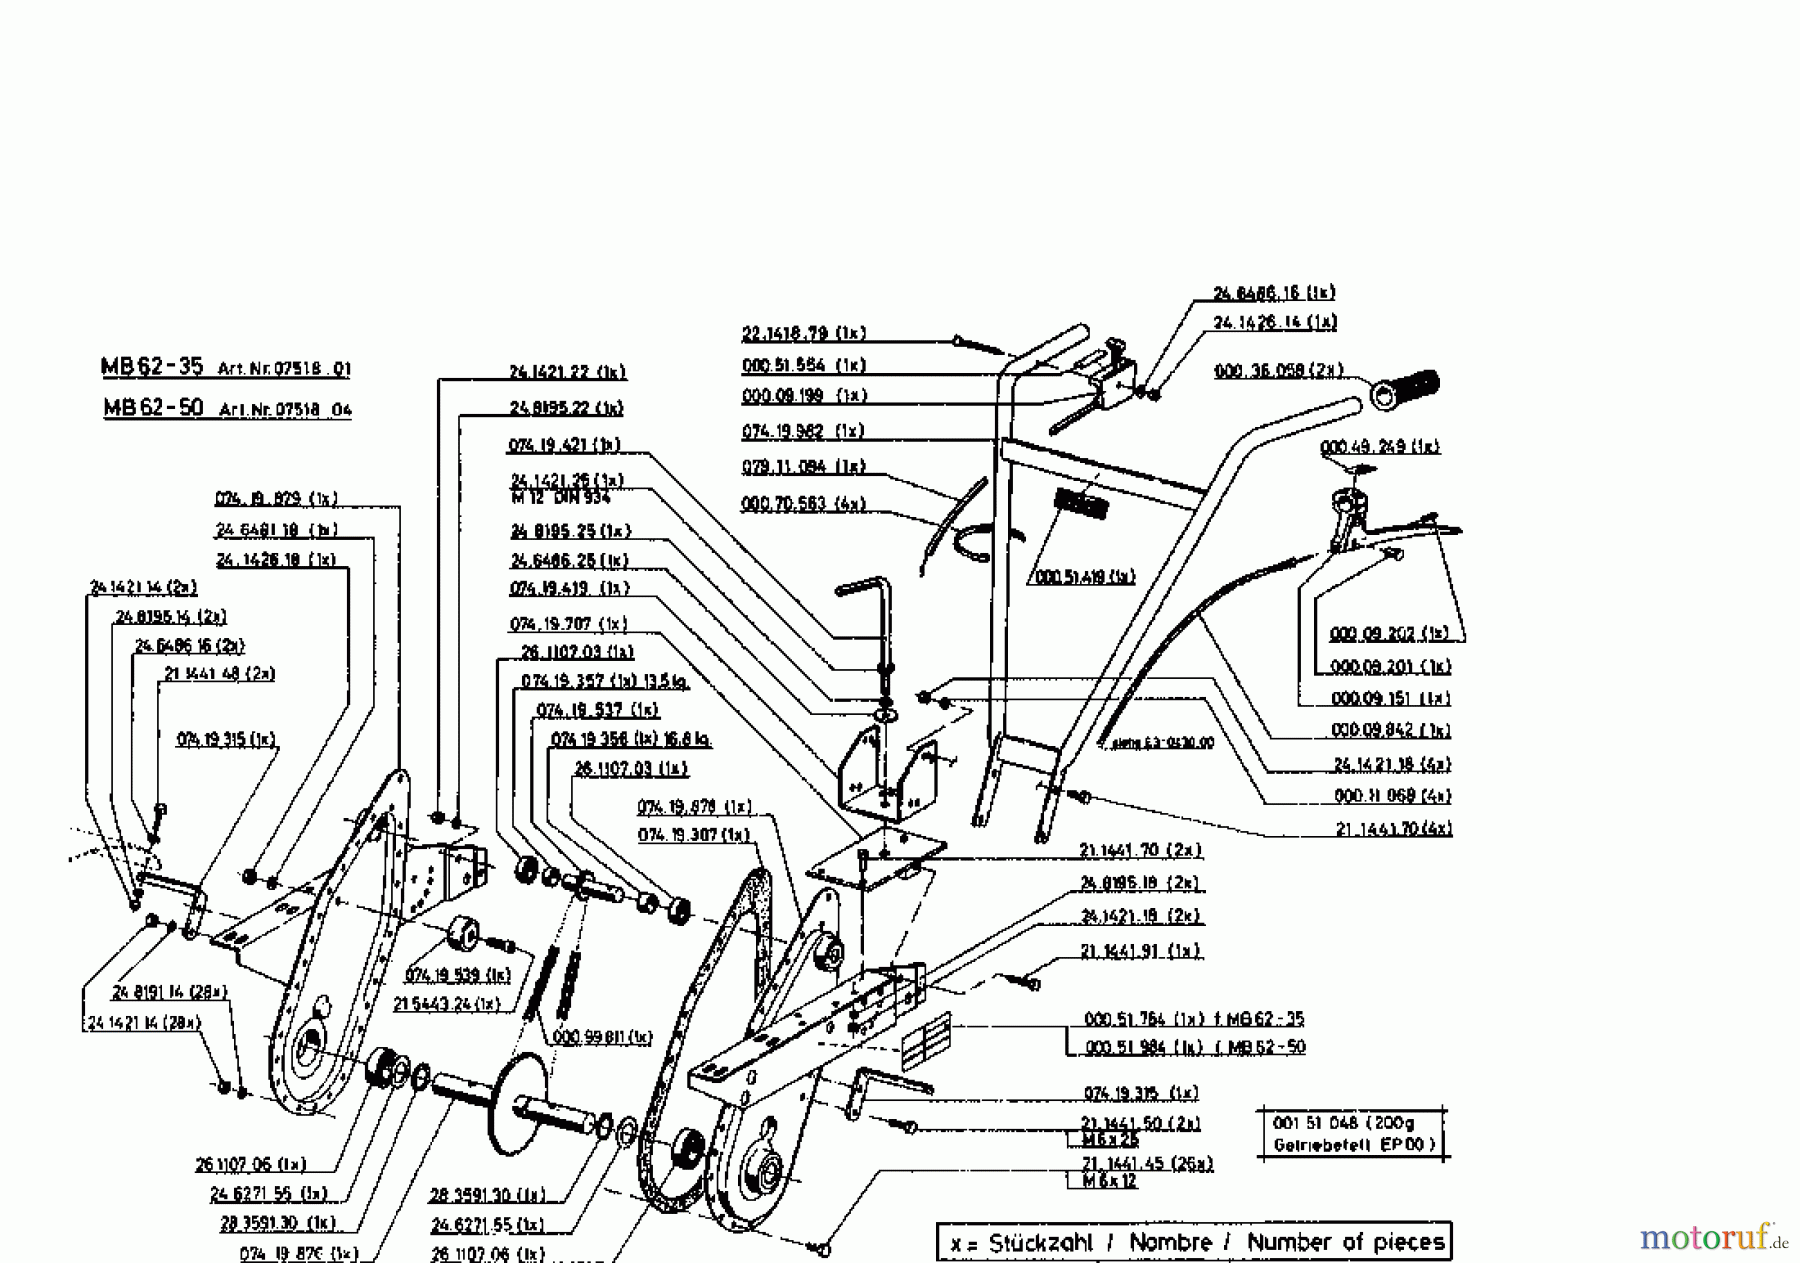  Gutbrod Motorhacken MB 62-50 07518.04  (1995) Grundgerät